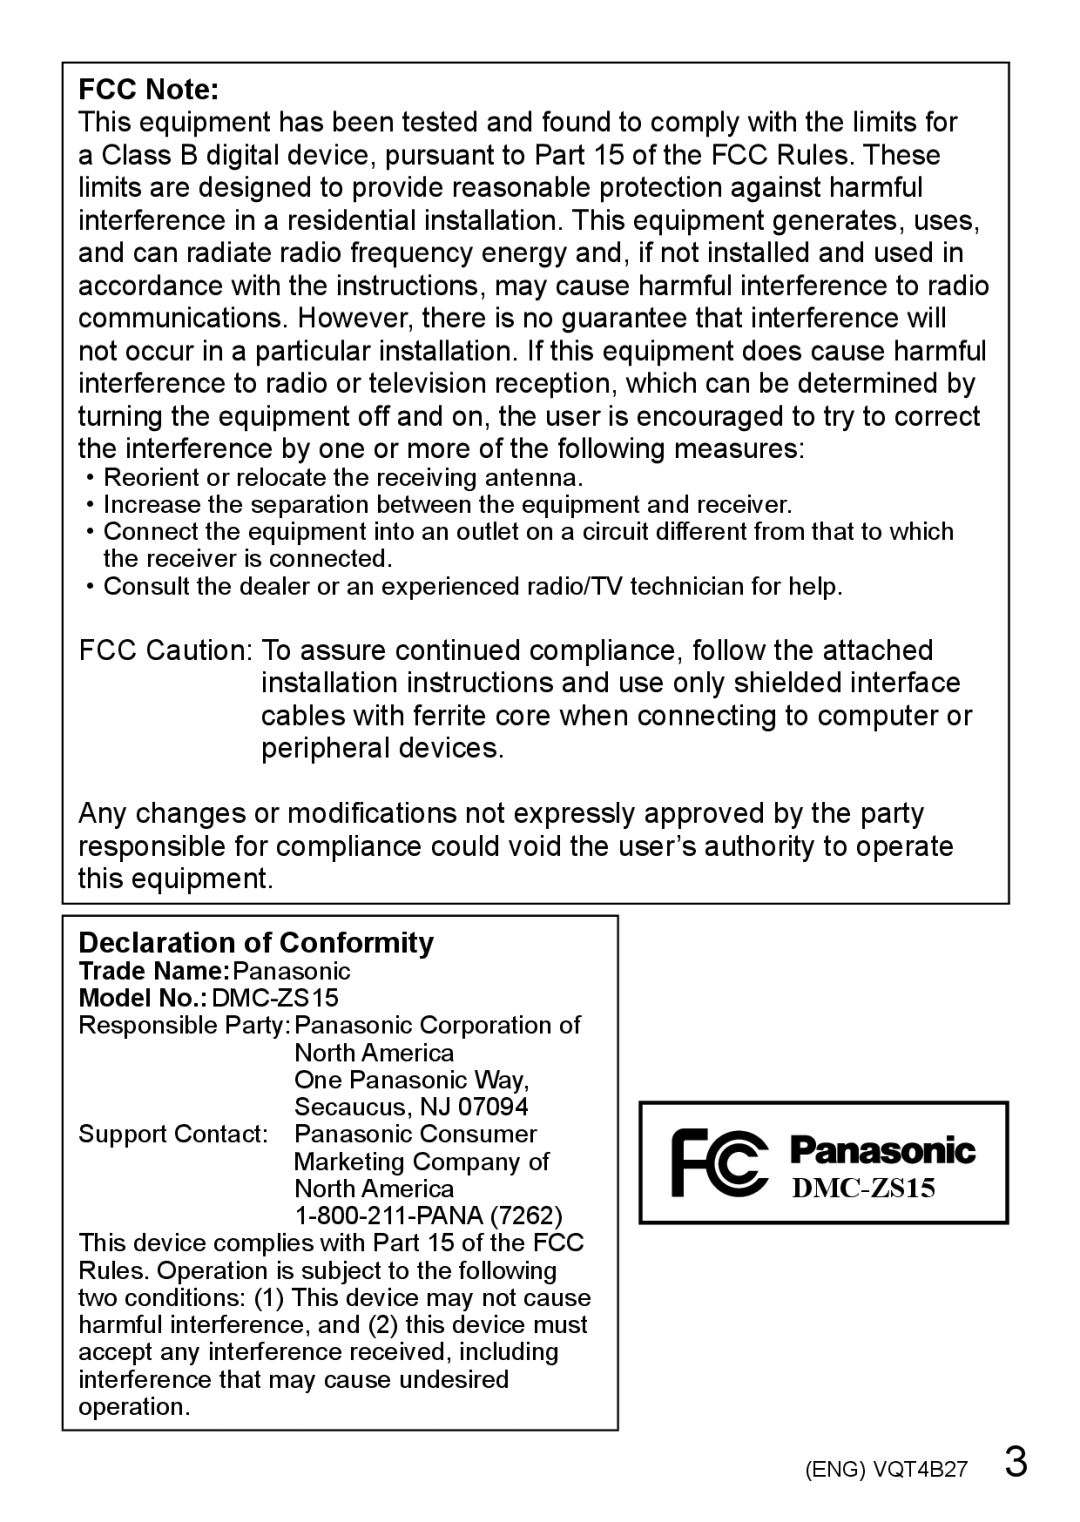 Panasonic VQT4B27, DMC-ZS15S, M1211KZ0, DMCZS15K owner manual FCC Note, Declaration of Conformity 